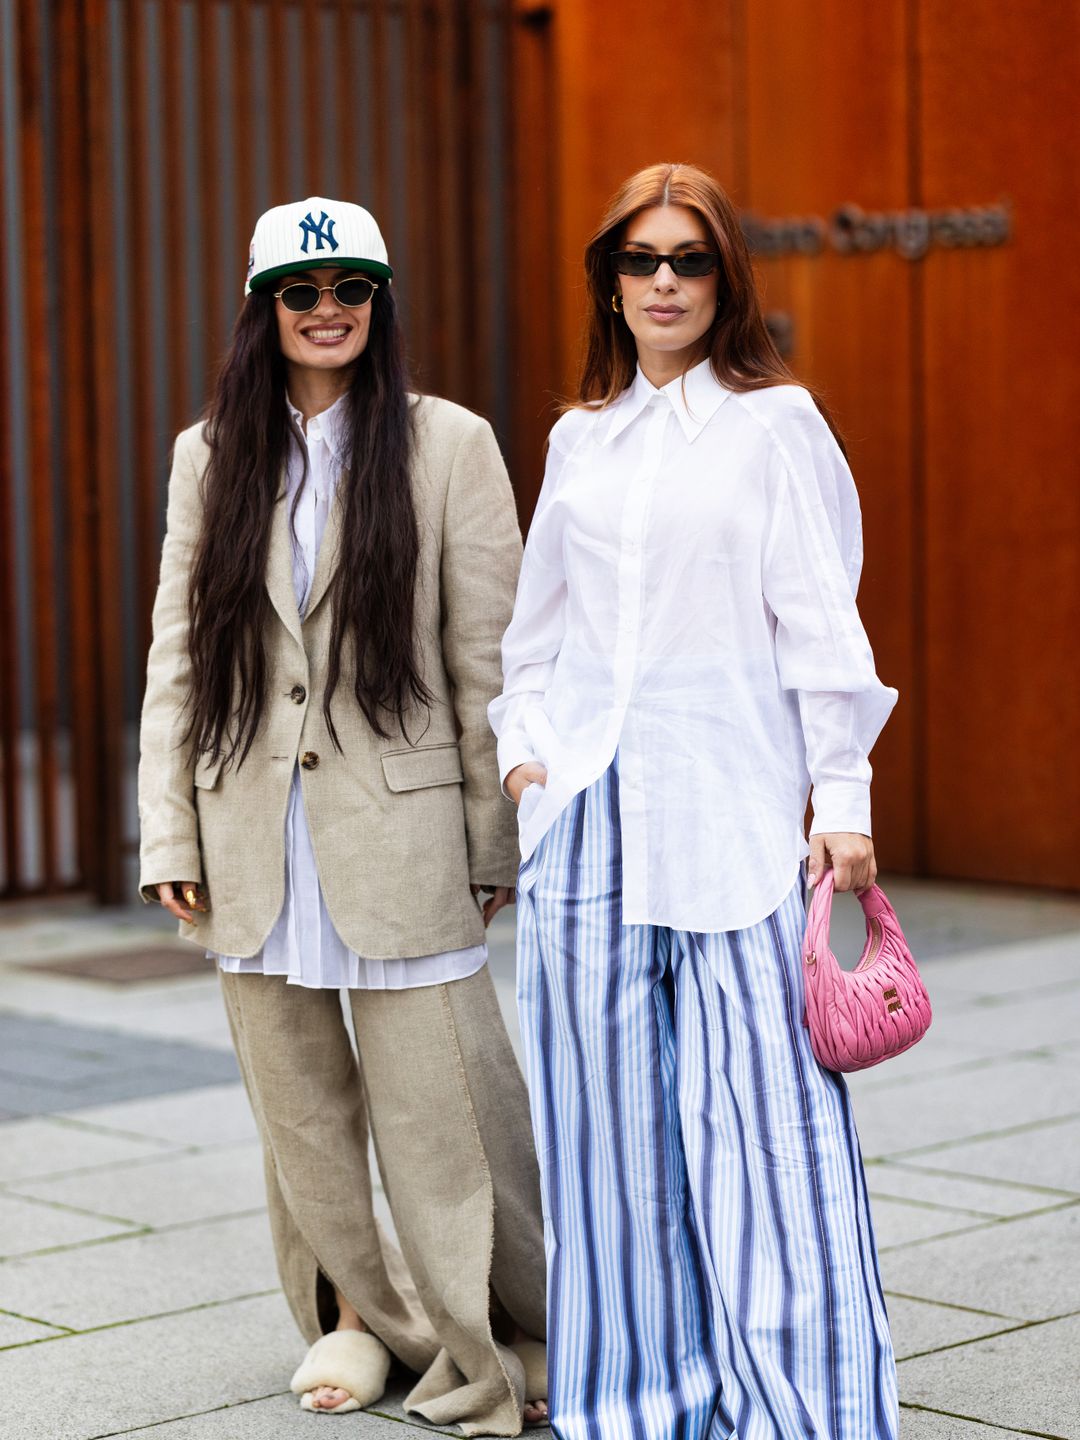 Fashion week guests wearing linen trousers